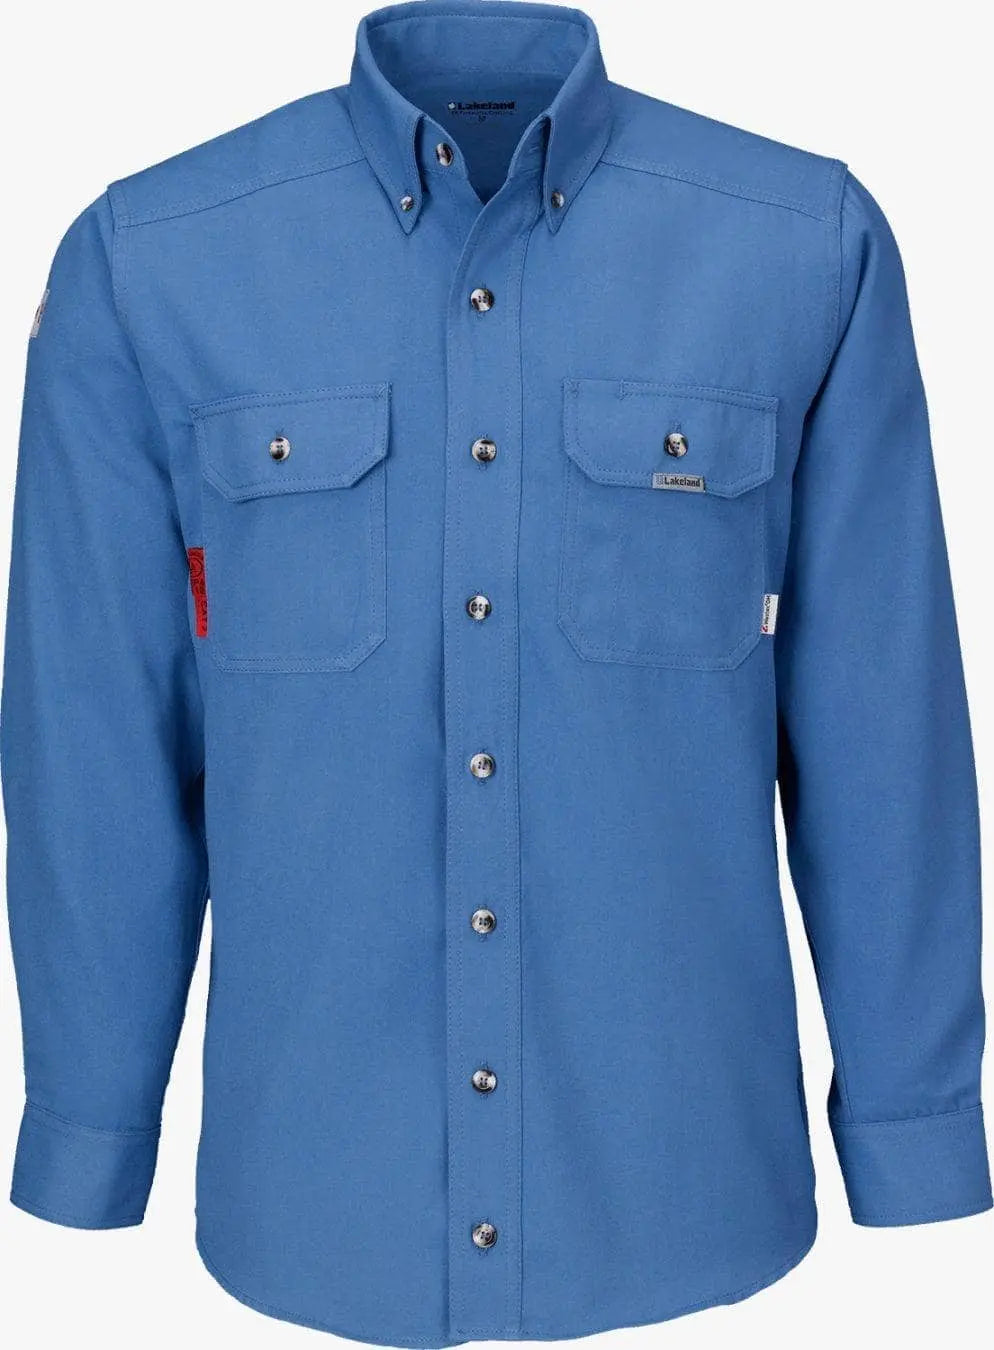 LAKELAND FR - 6.5oz Westex DH Button Up Shirt, Blue